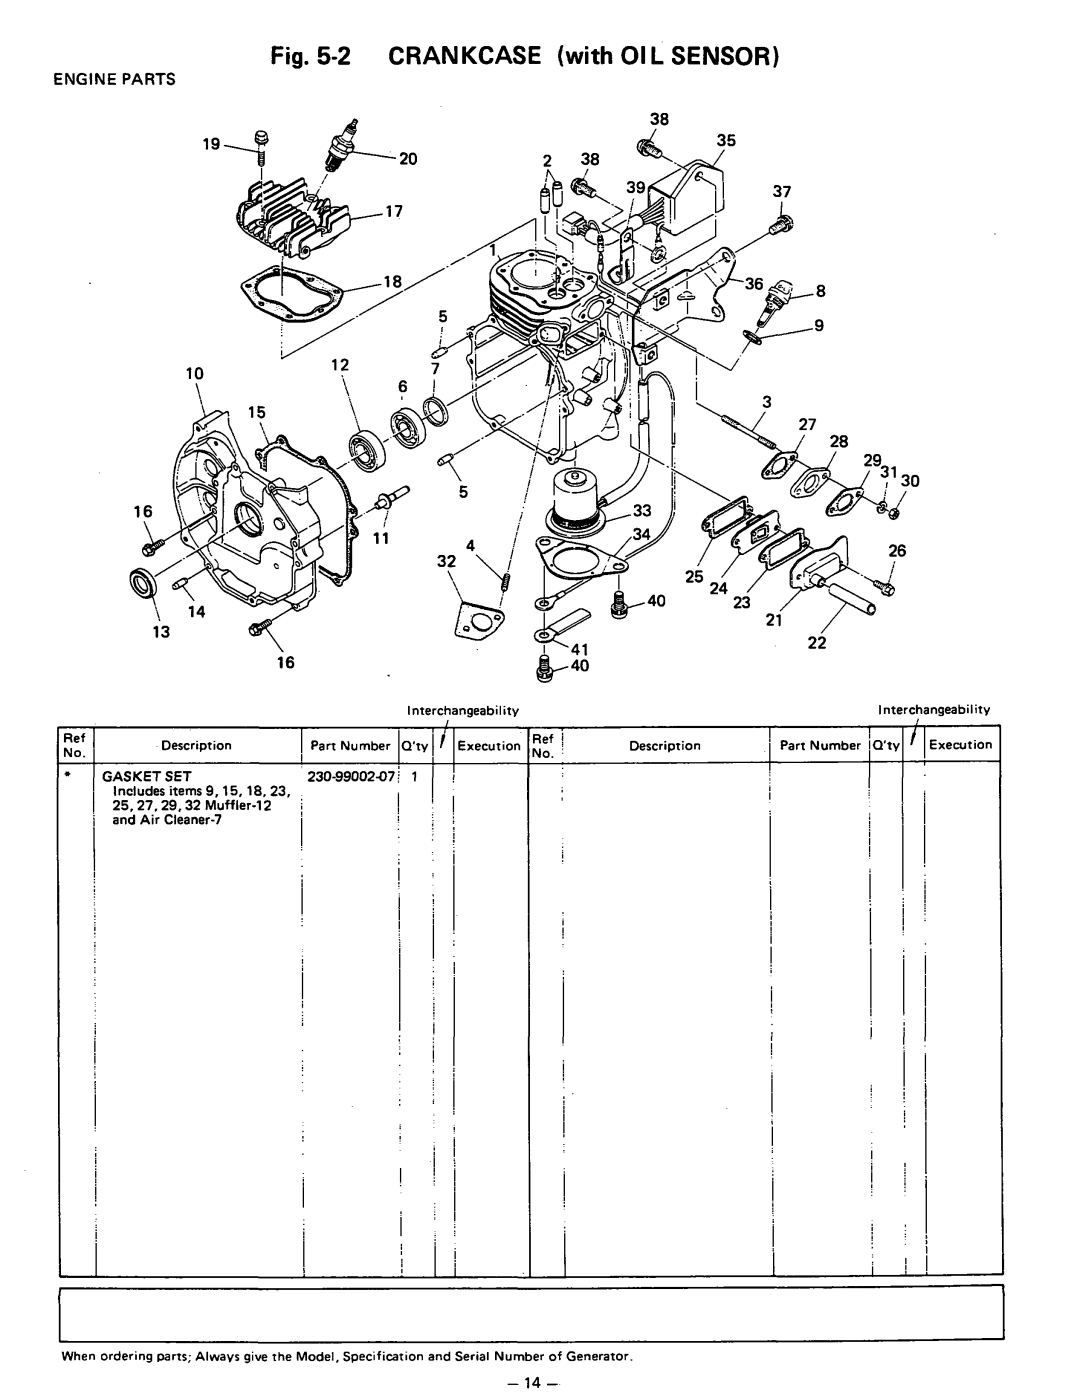 Subaru Robin Power Products R650 manual 2CRANKCASE with 01L SENSOR, Engine Parts, 25,27,29,32 Muffler-12 